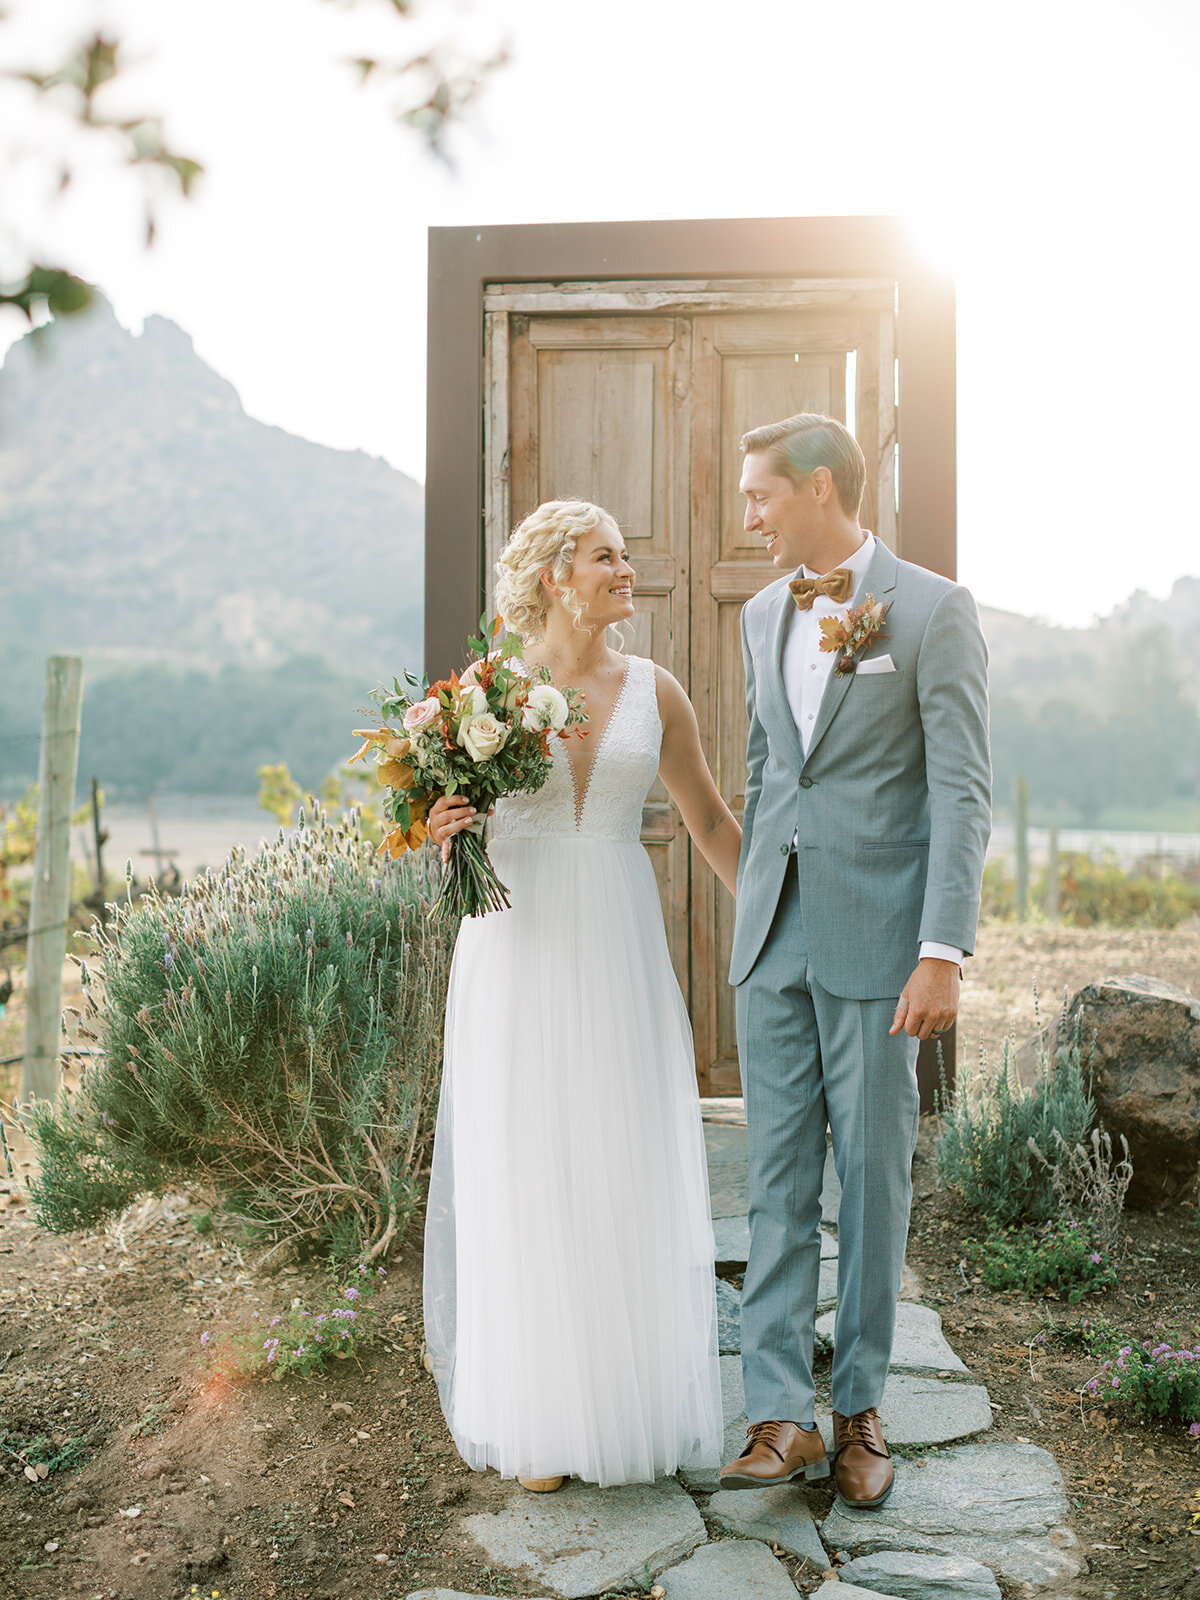 Jenny-Quicksall-Photography-Cielo Farms-Saddlerock Wedding-K+C-0680.jpg